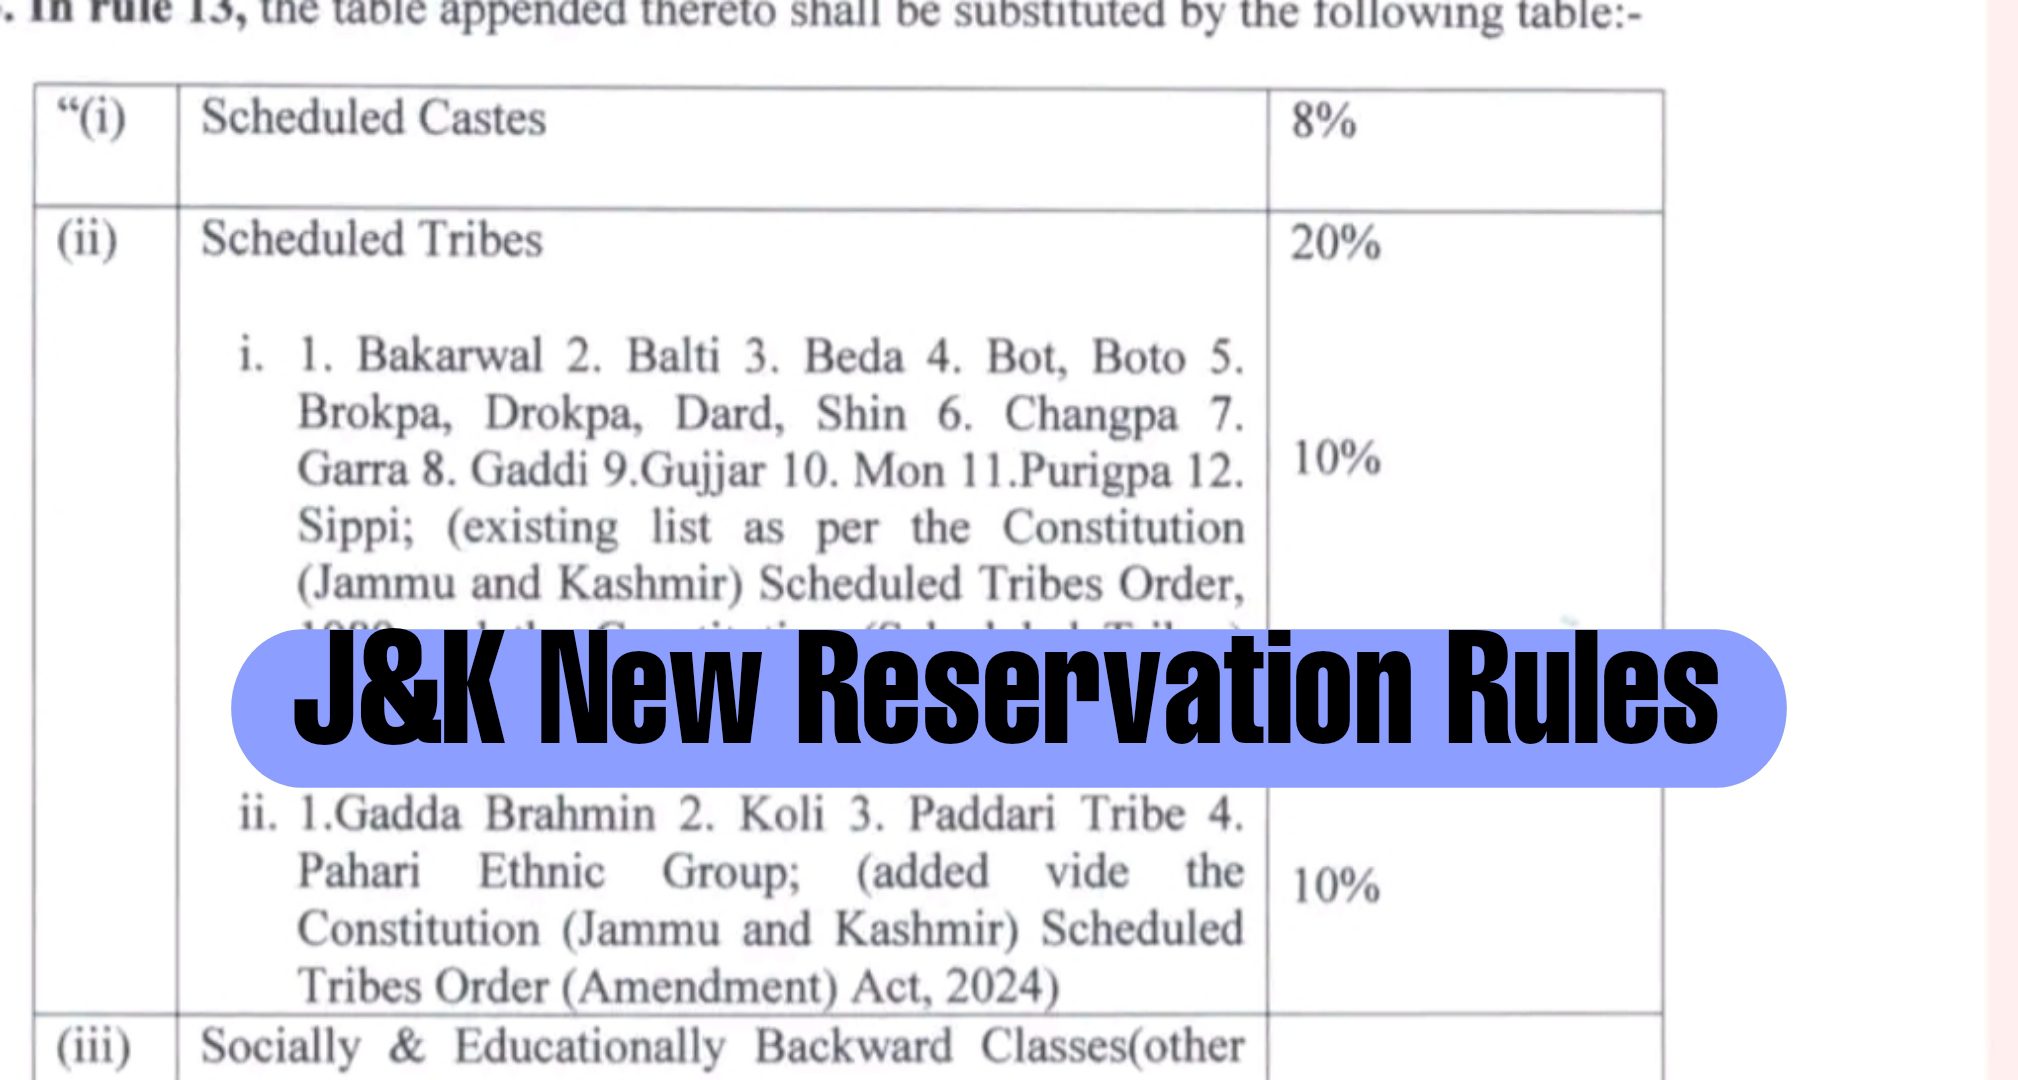 j&k new reservation rules